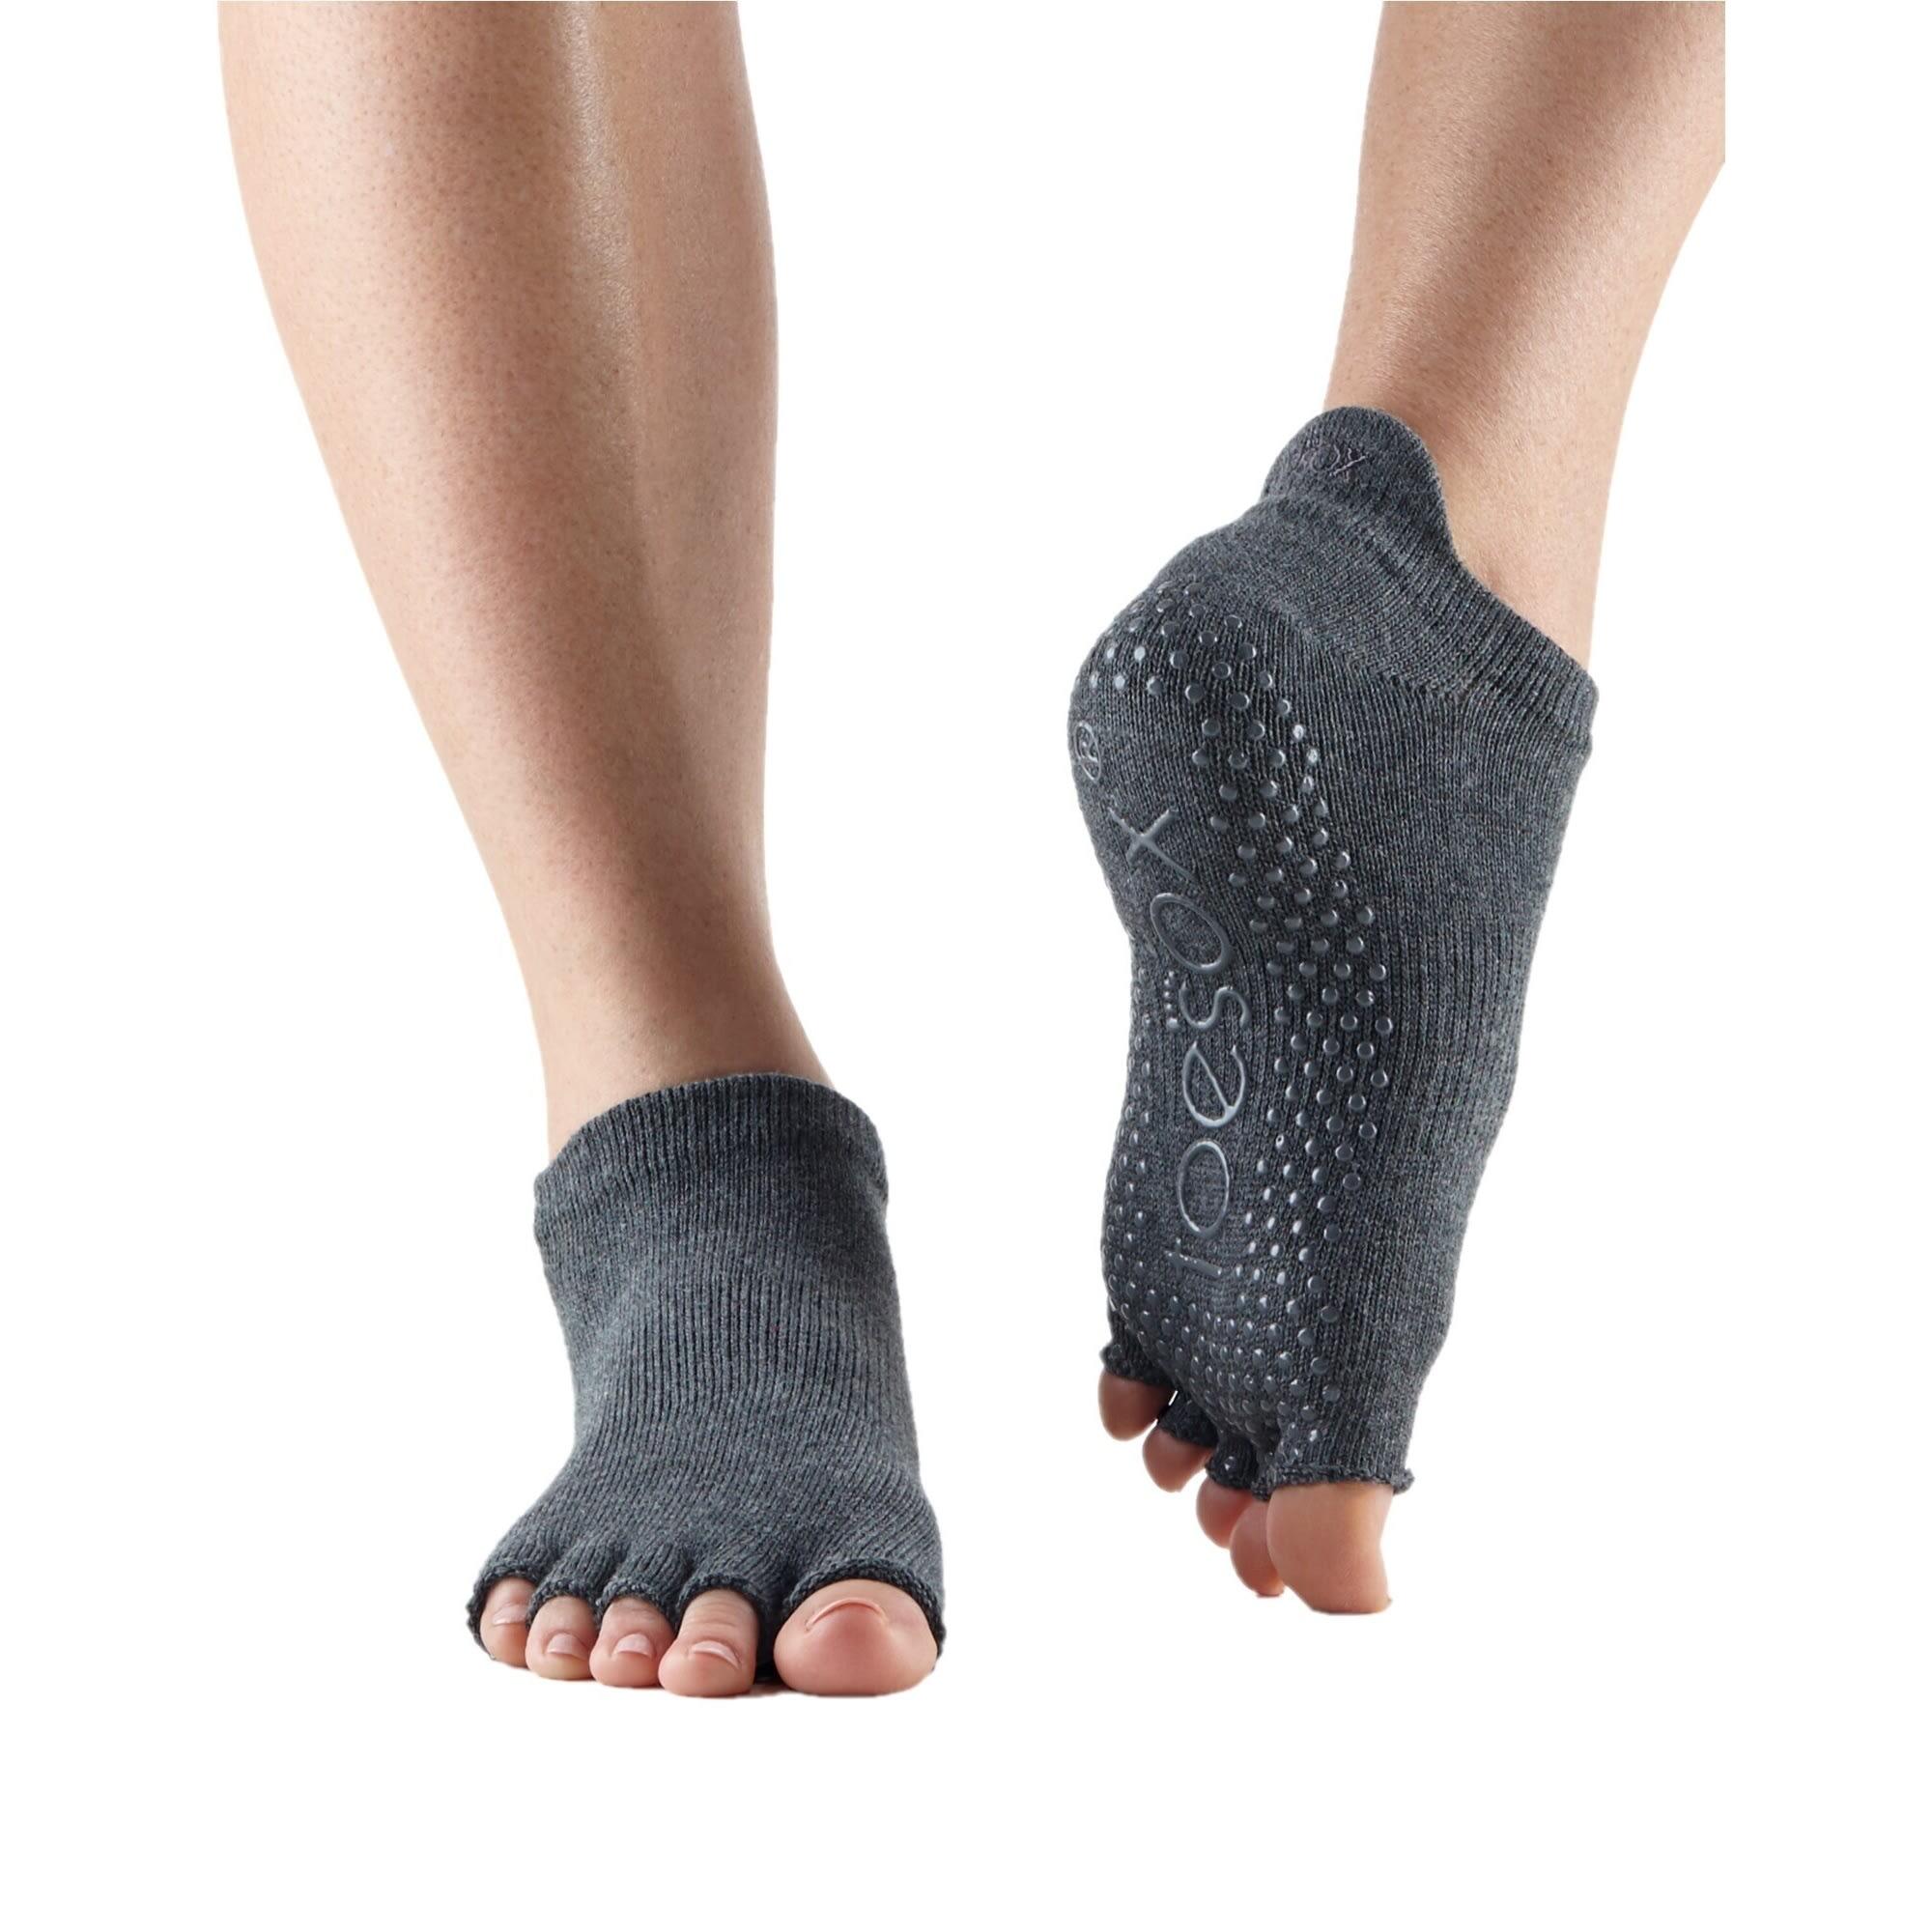 FITNESS-MAD Womens/Ladies Half Toe Socks (Charcoal Grey)